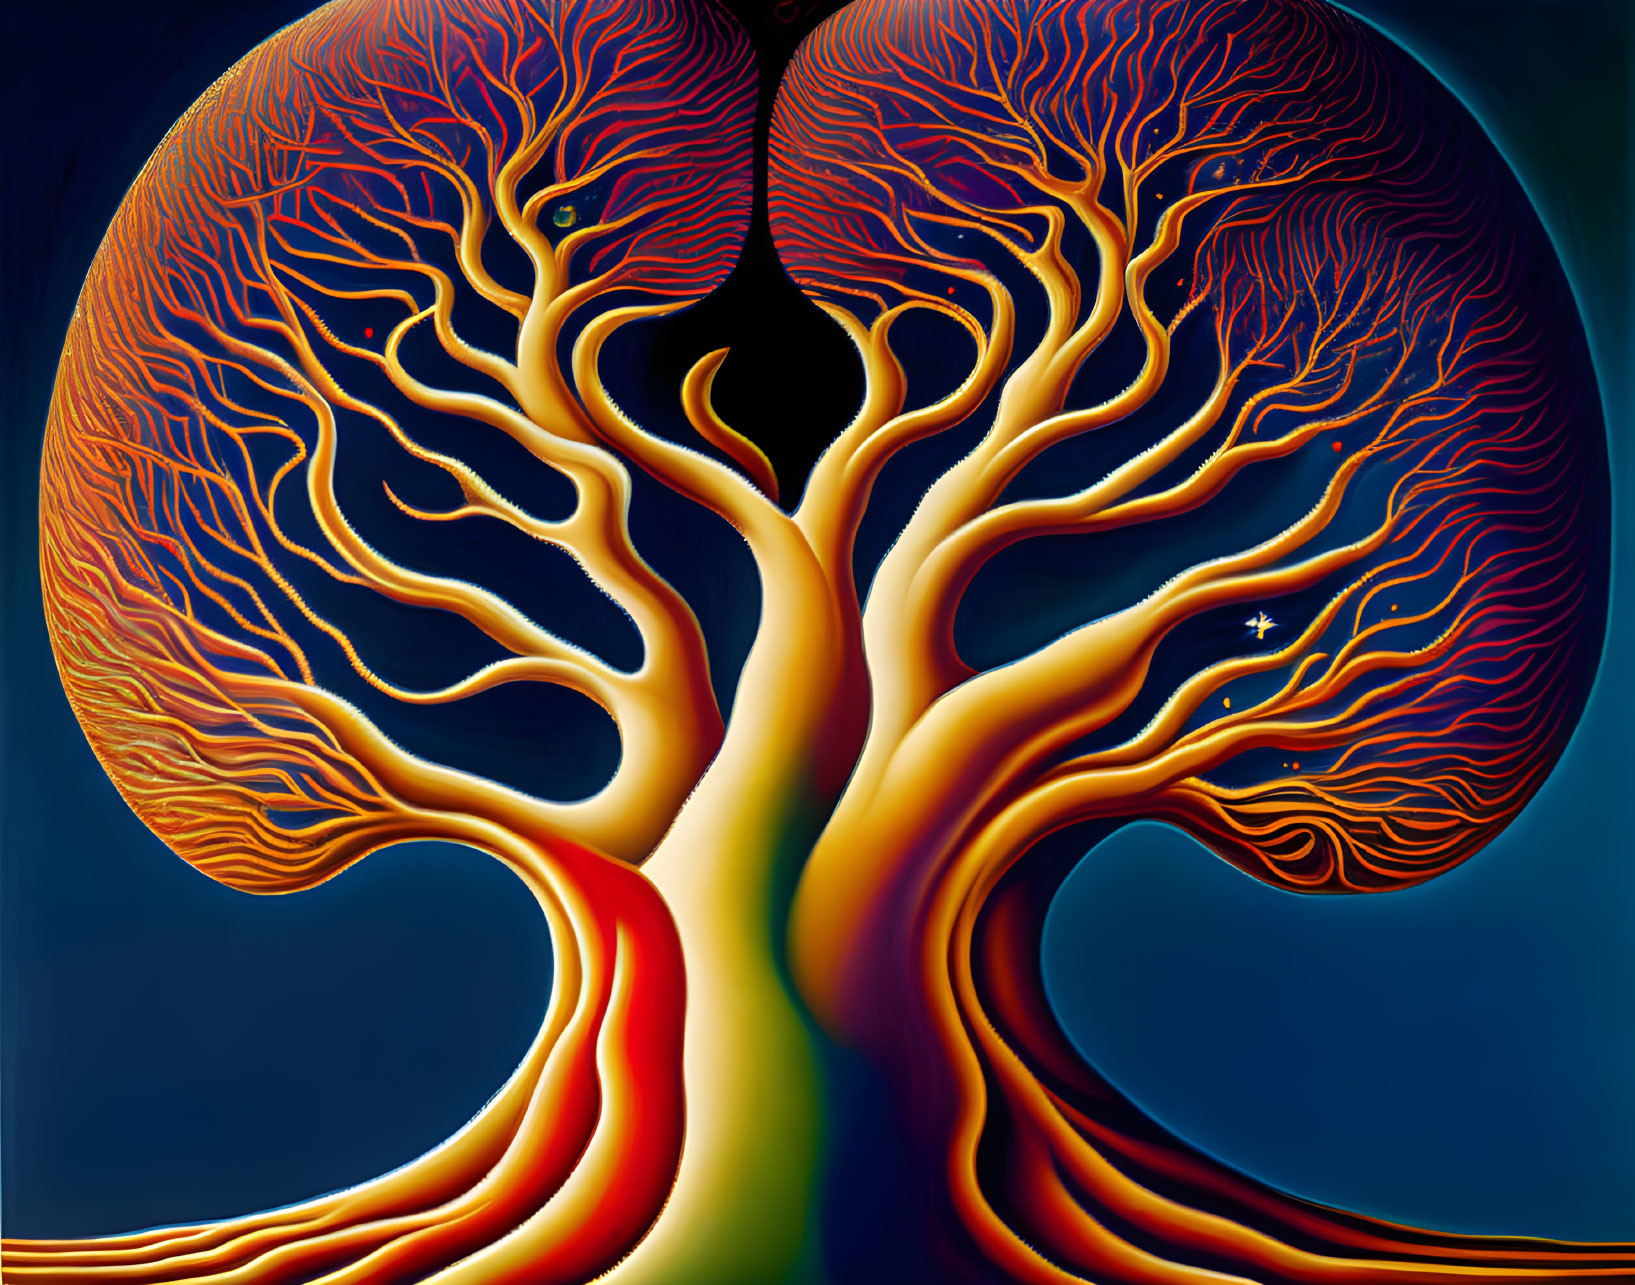 Stylized image of intertwined trees on dark blue background